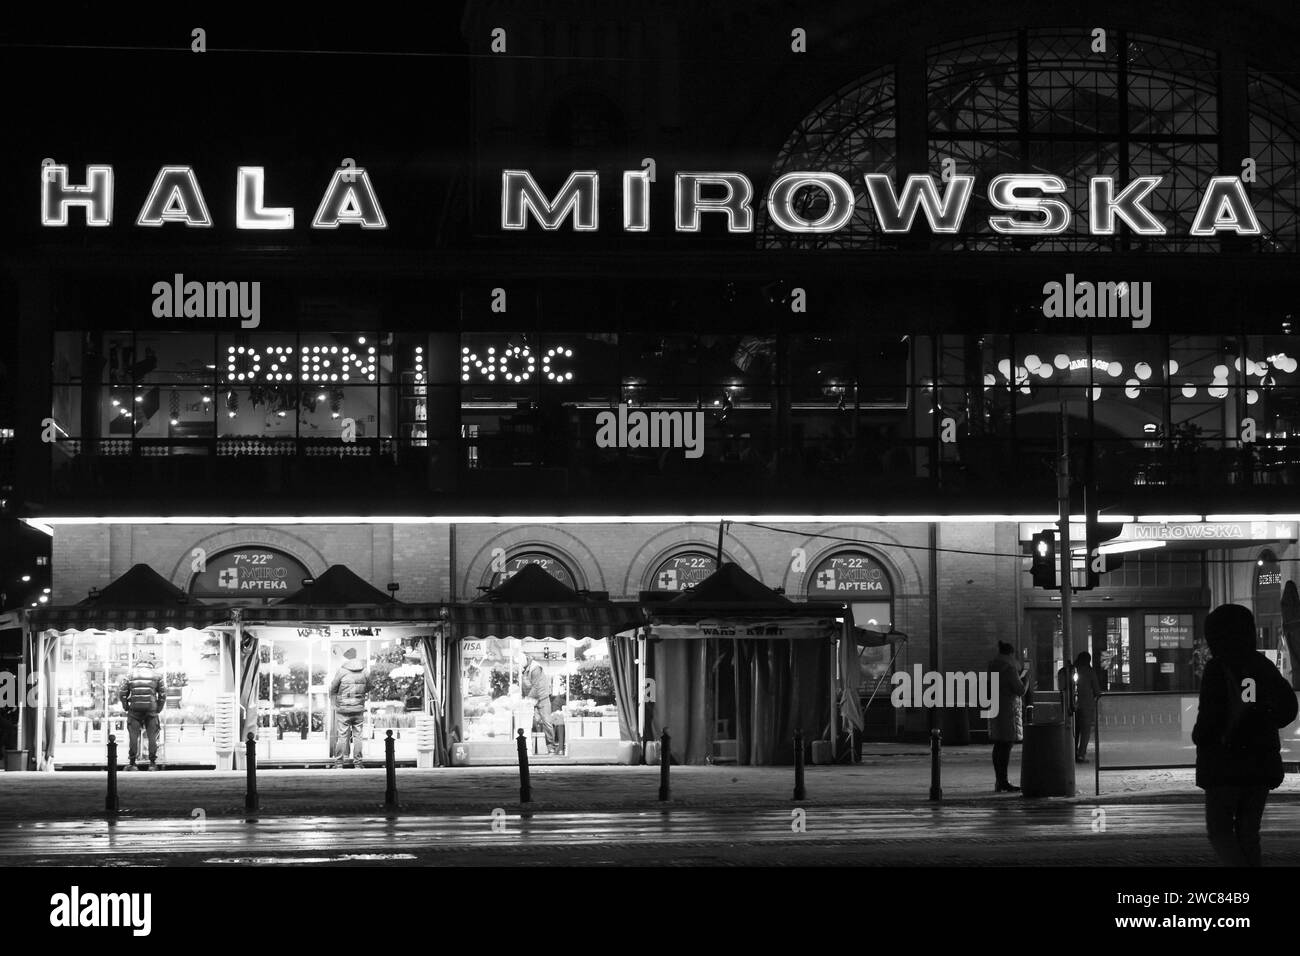 Hala Mirowska shopping mall in Warsaw, Poland in the night Stock Photo